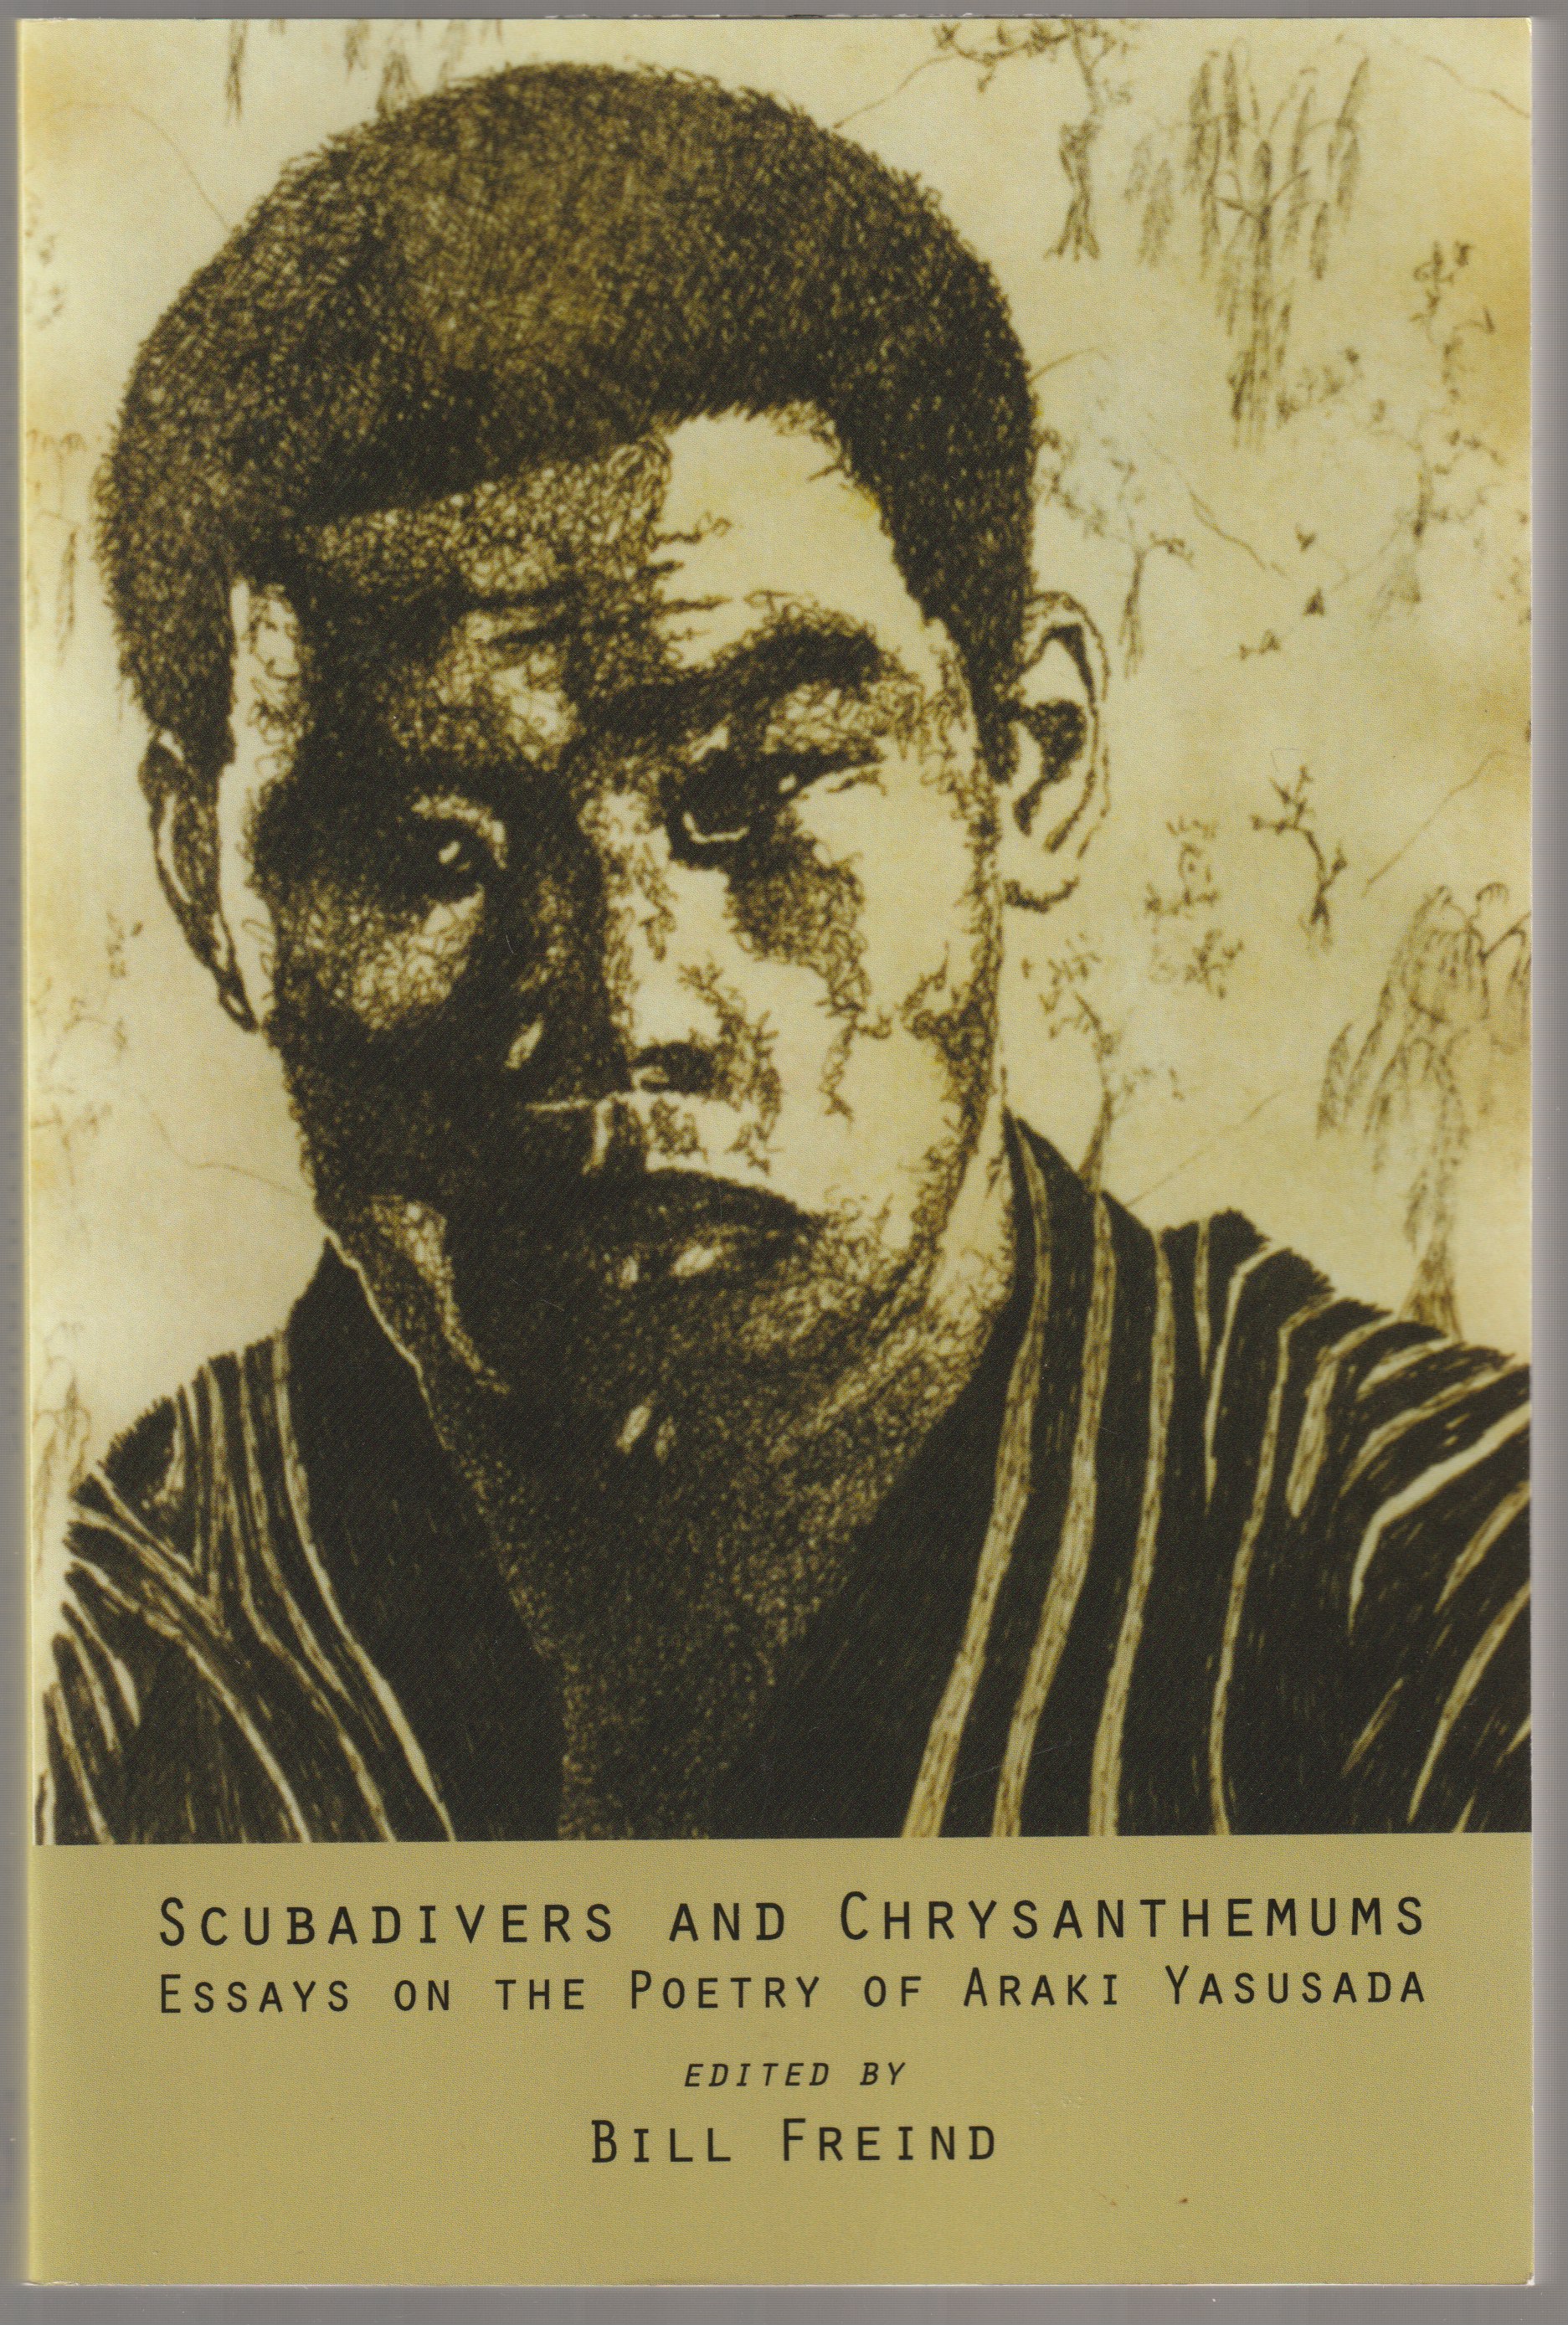 Scubadivers and chrysanthemums : essays on the poetry of Araki Yasusada.